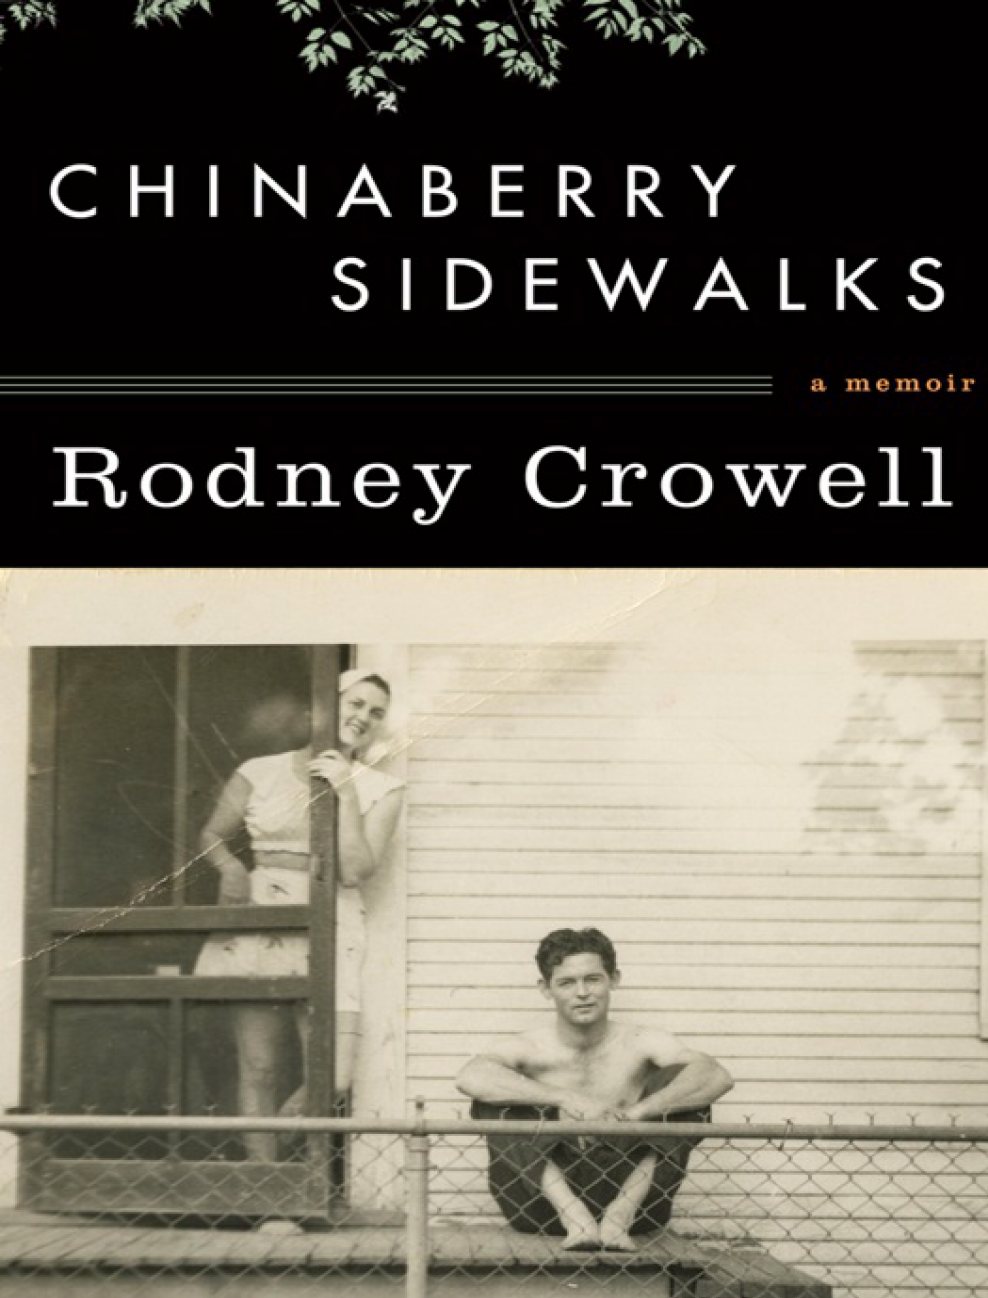 01 - USA1 - Rodney Crowell - Chinaberry Sidewalks 2011.jpg